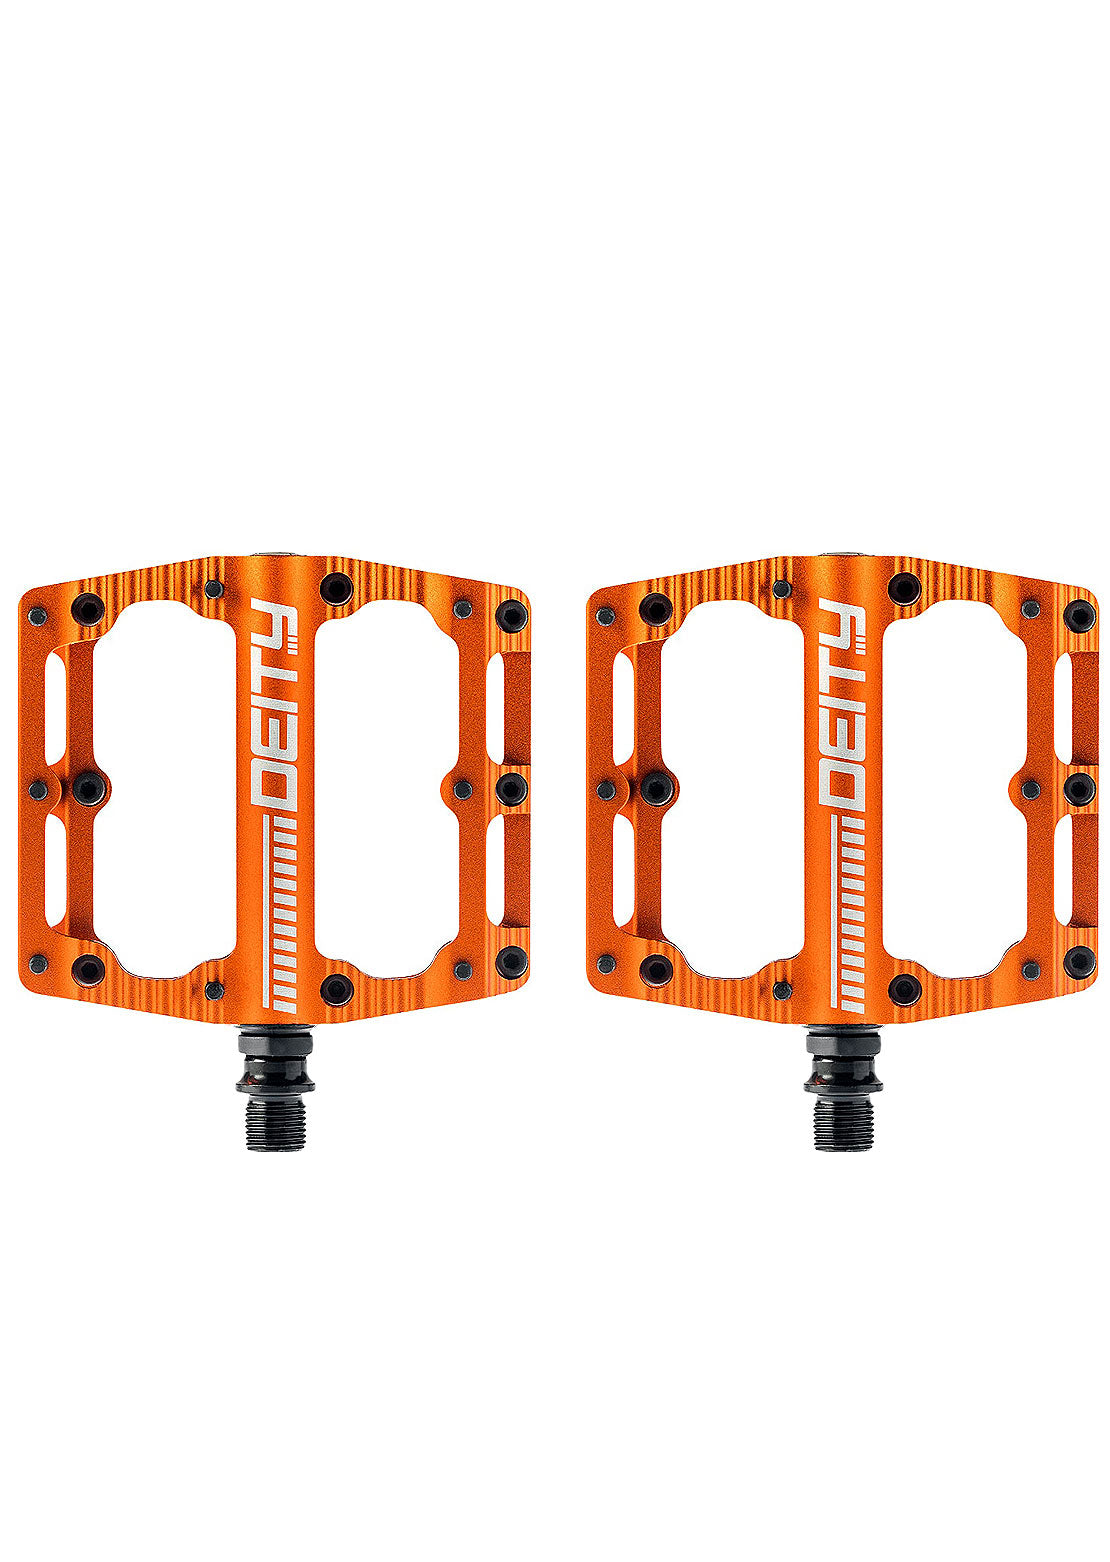 Deity Black Kat Platform Pedals - Pair Orange